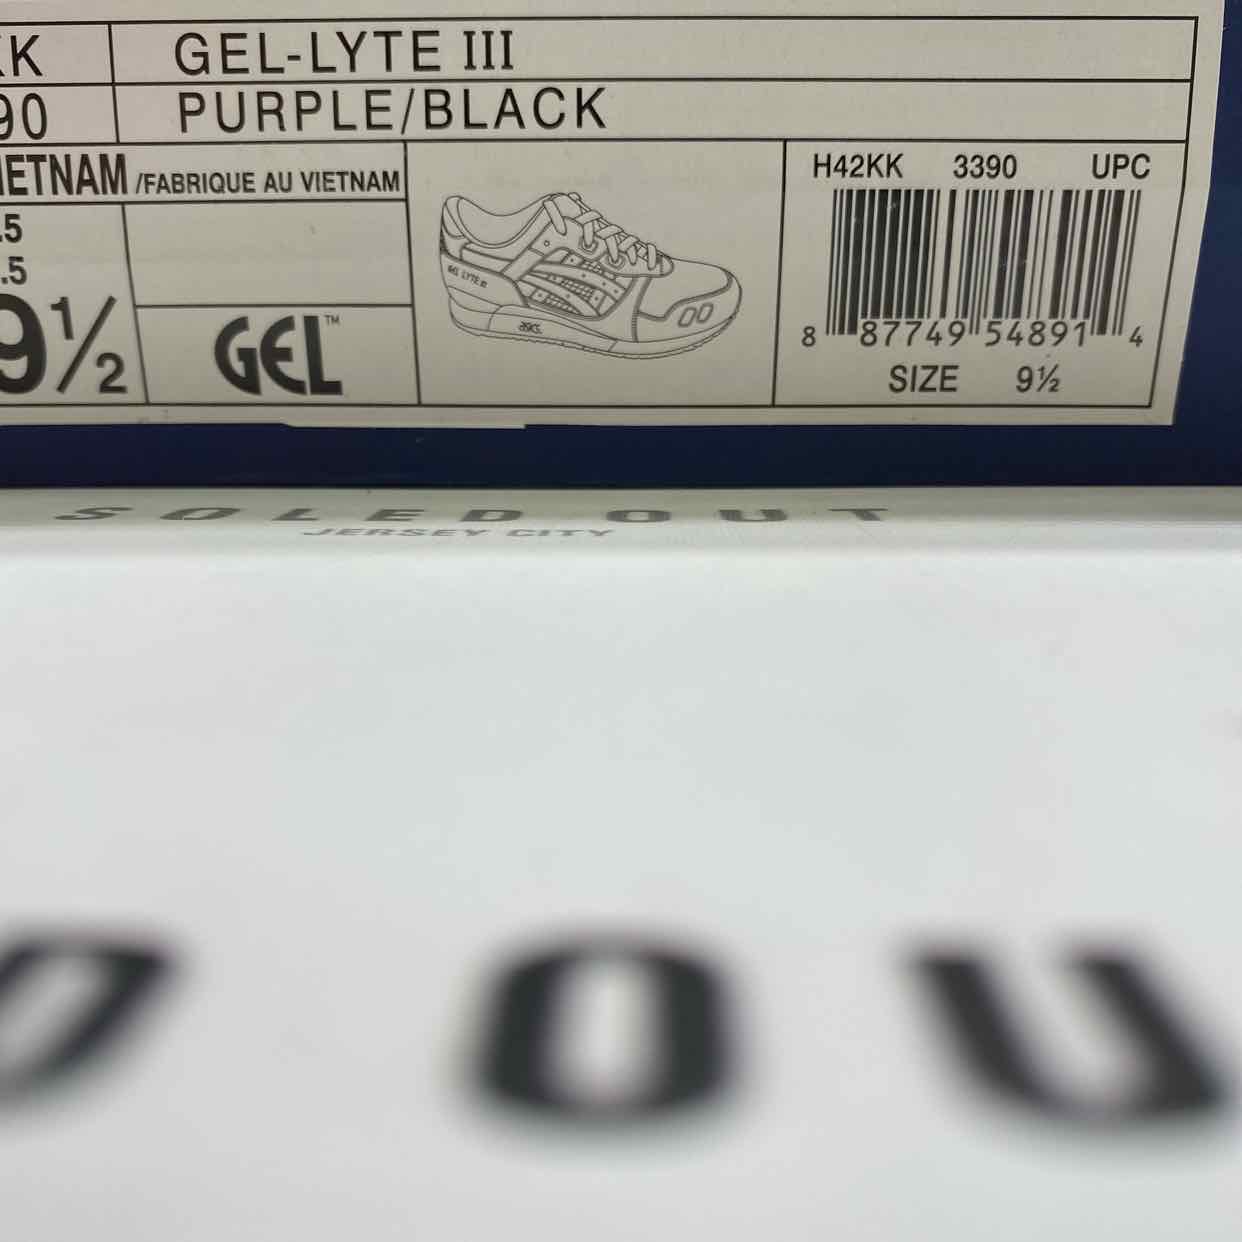 Asics Gel-Lyte 3 &quot;Sneaker Freaker&quot; 2014 New Size 9.5